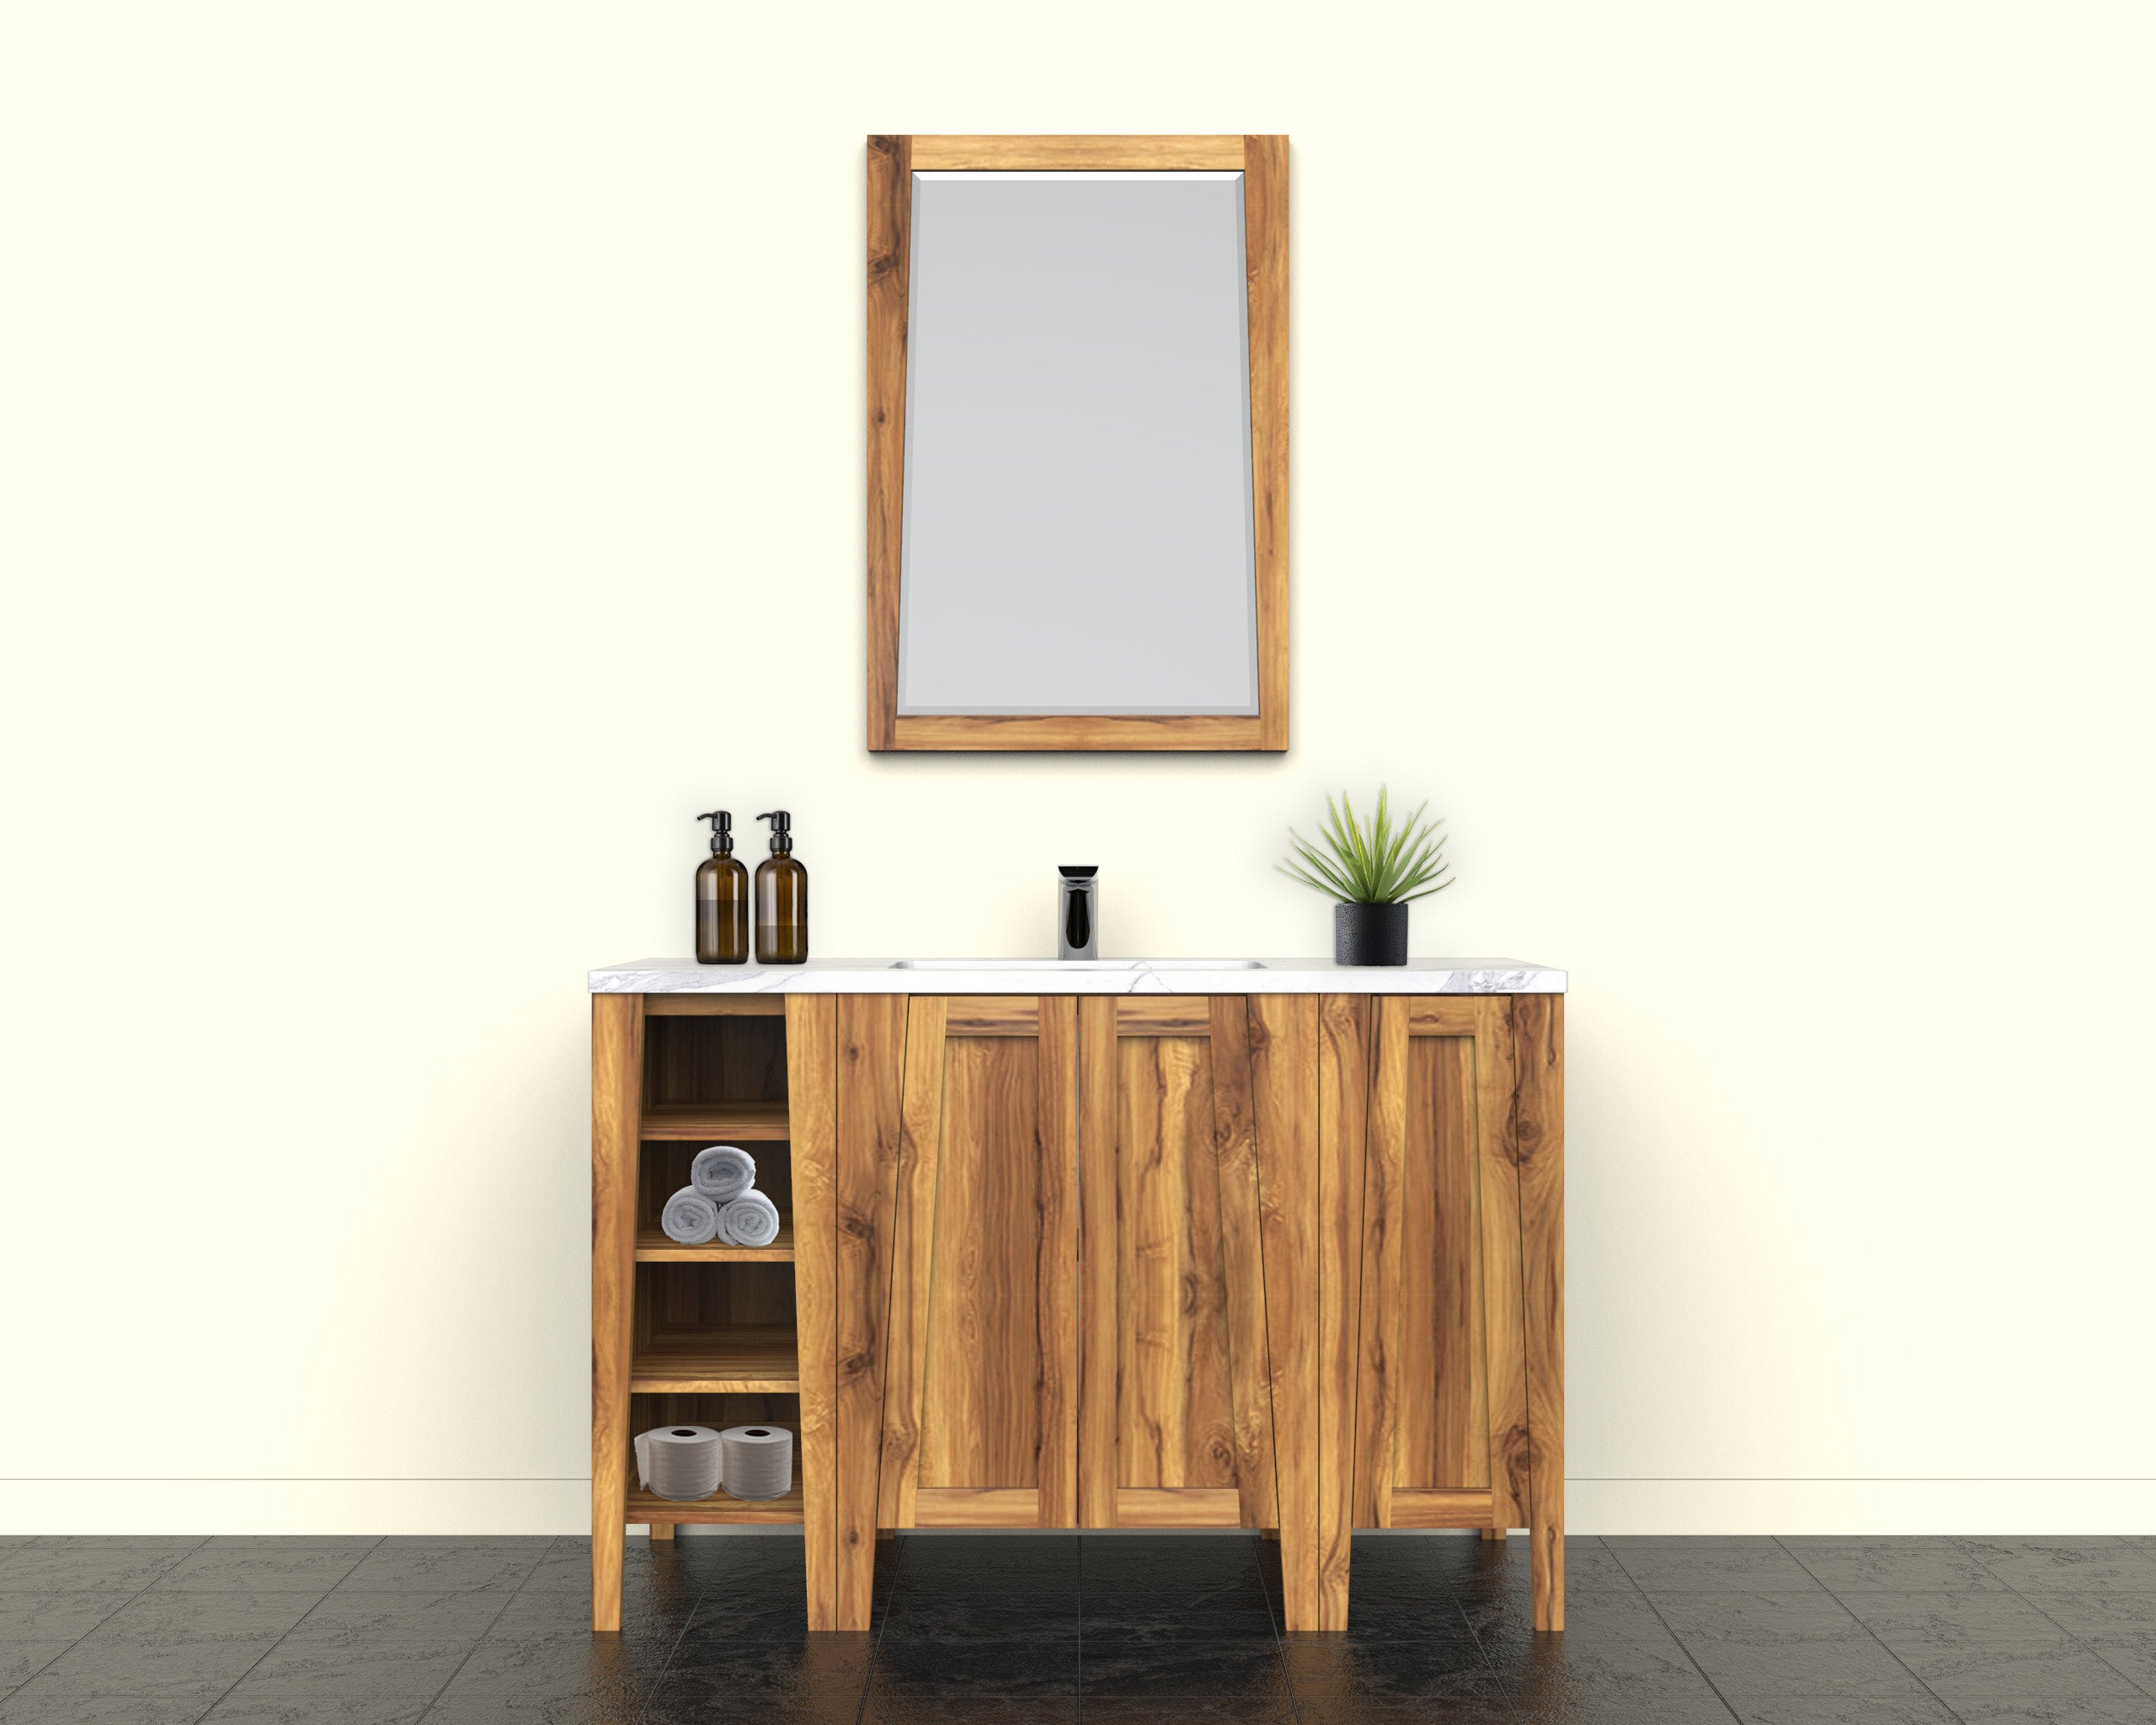 Significado® 24" Teak Wood Bathroom Vanity - Signifiacado® 12”L Modular Compact Side Vanity with Shelves - Signifiacado® 12”L Modular Compact Side Vanity with Door - Significado® 24" x 35" Teak Wood Wall Mirror